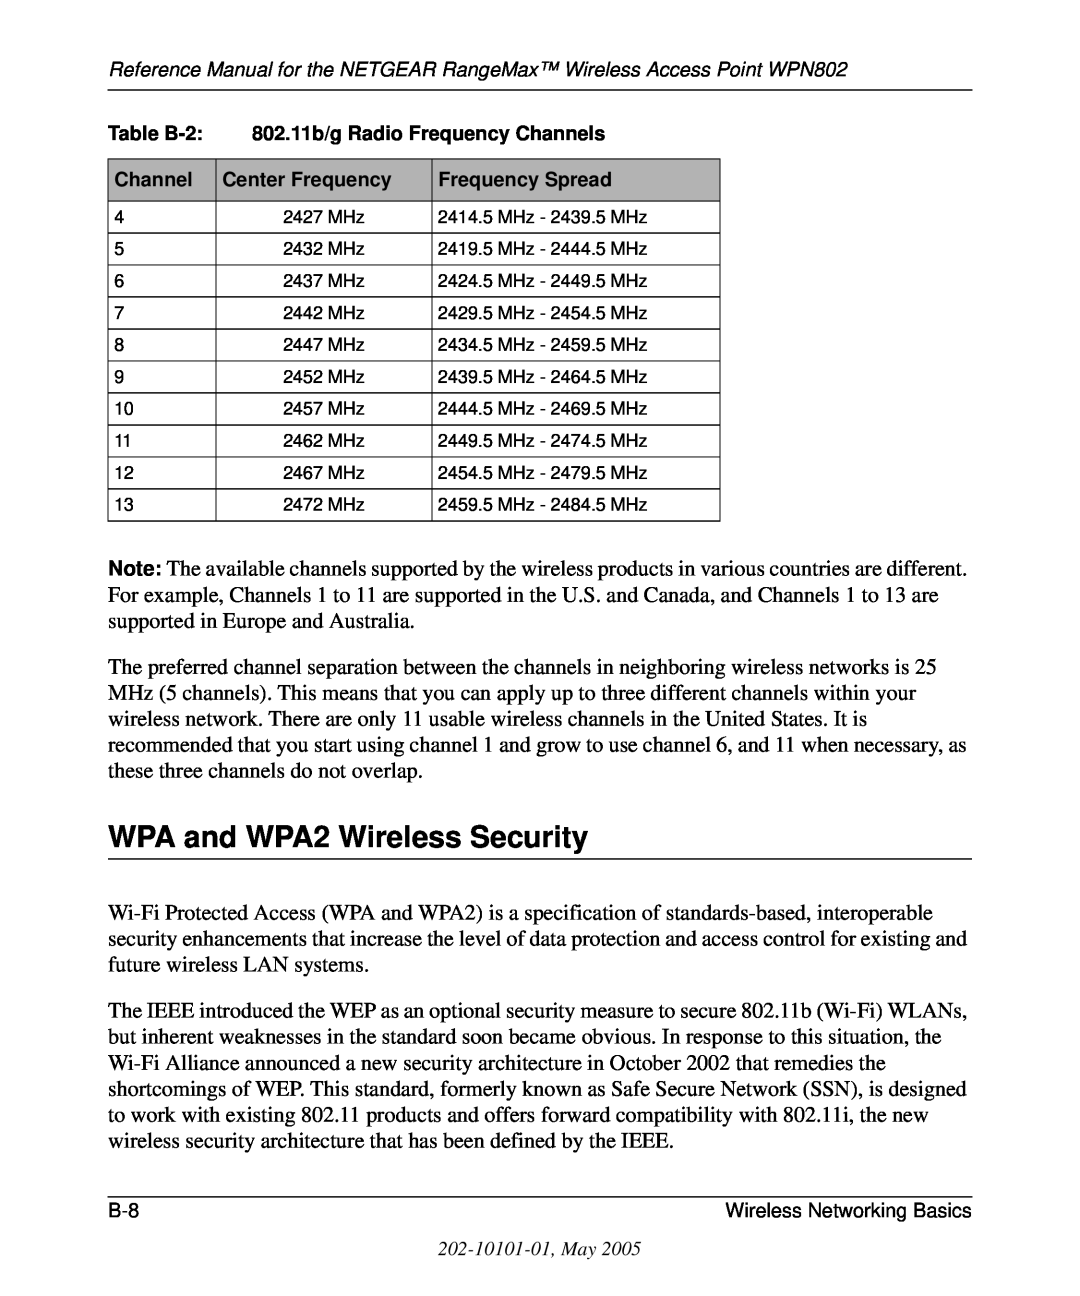 NETGEAR WPN802 manual WPA and WPA2 Wireless Security 